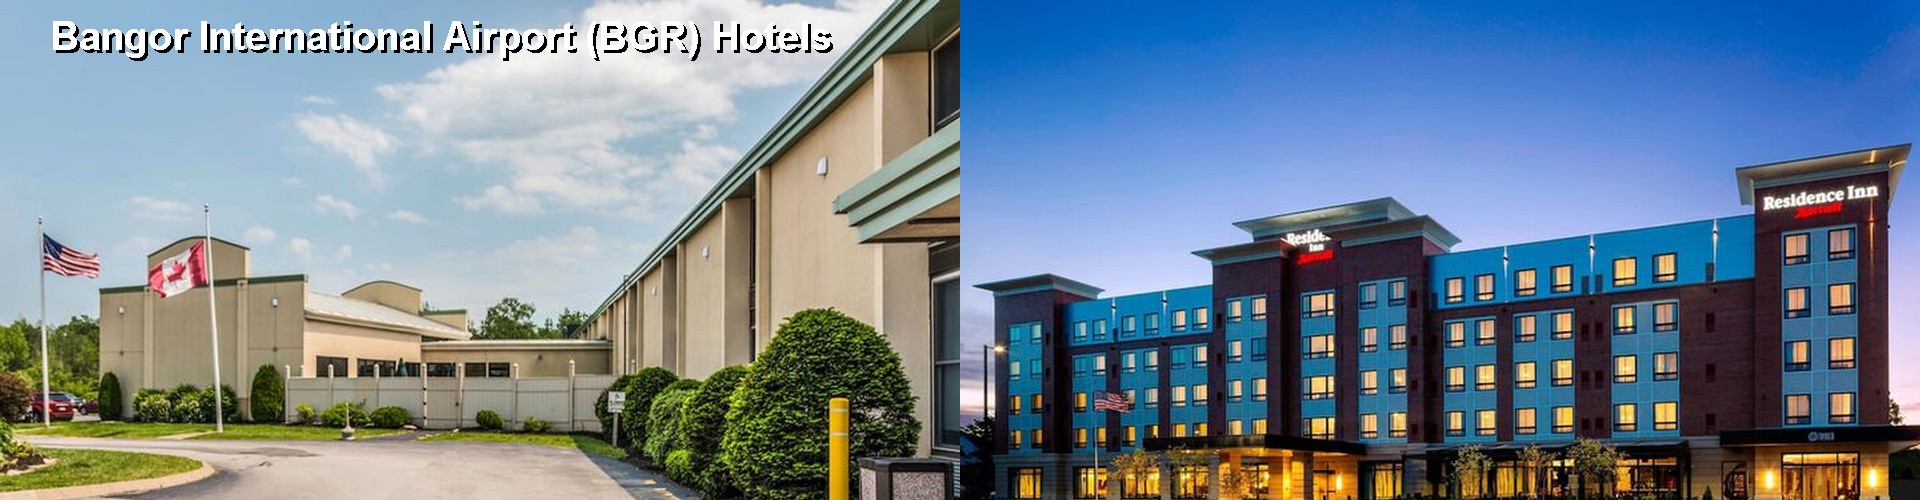 4 Best Hotels near Bangor International Airport (BGR)